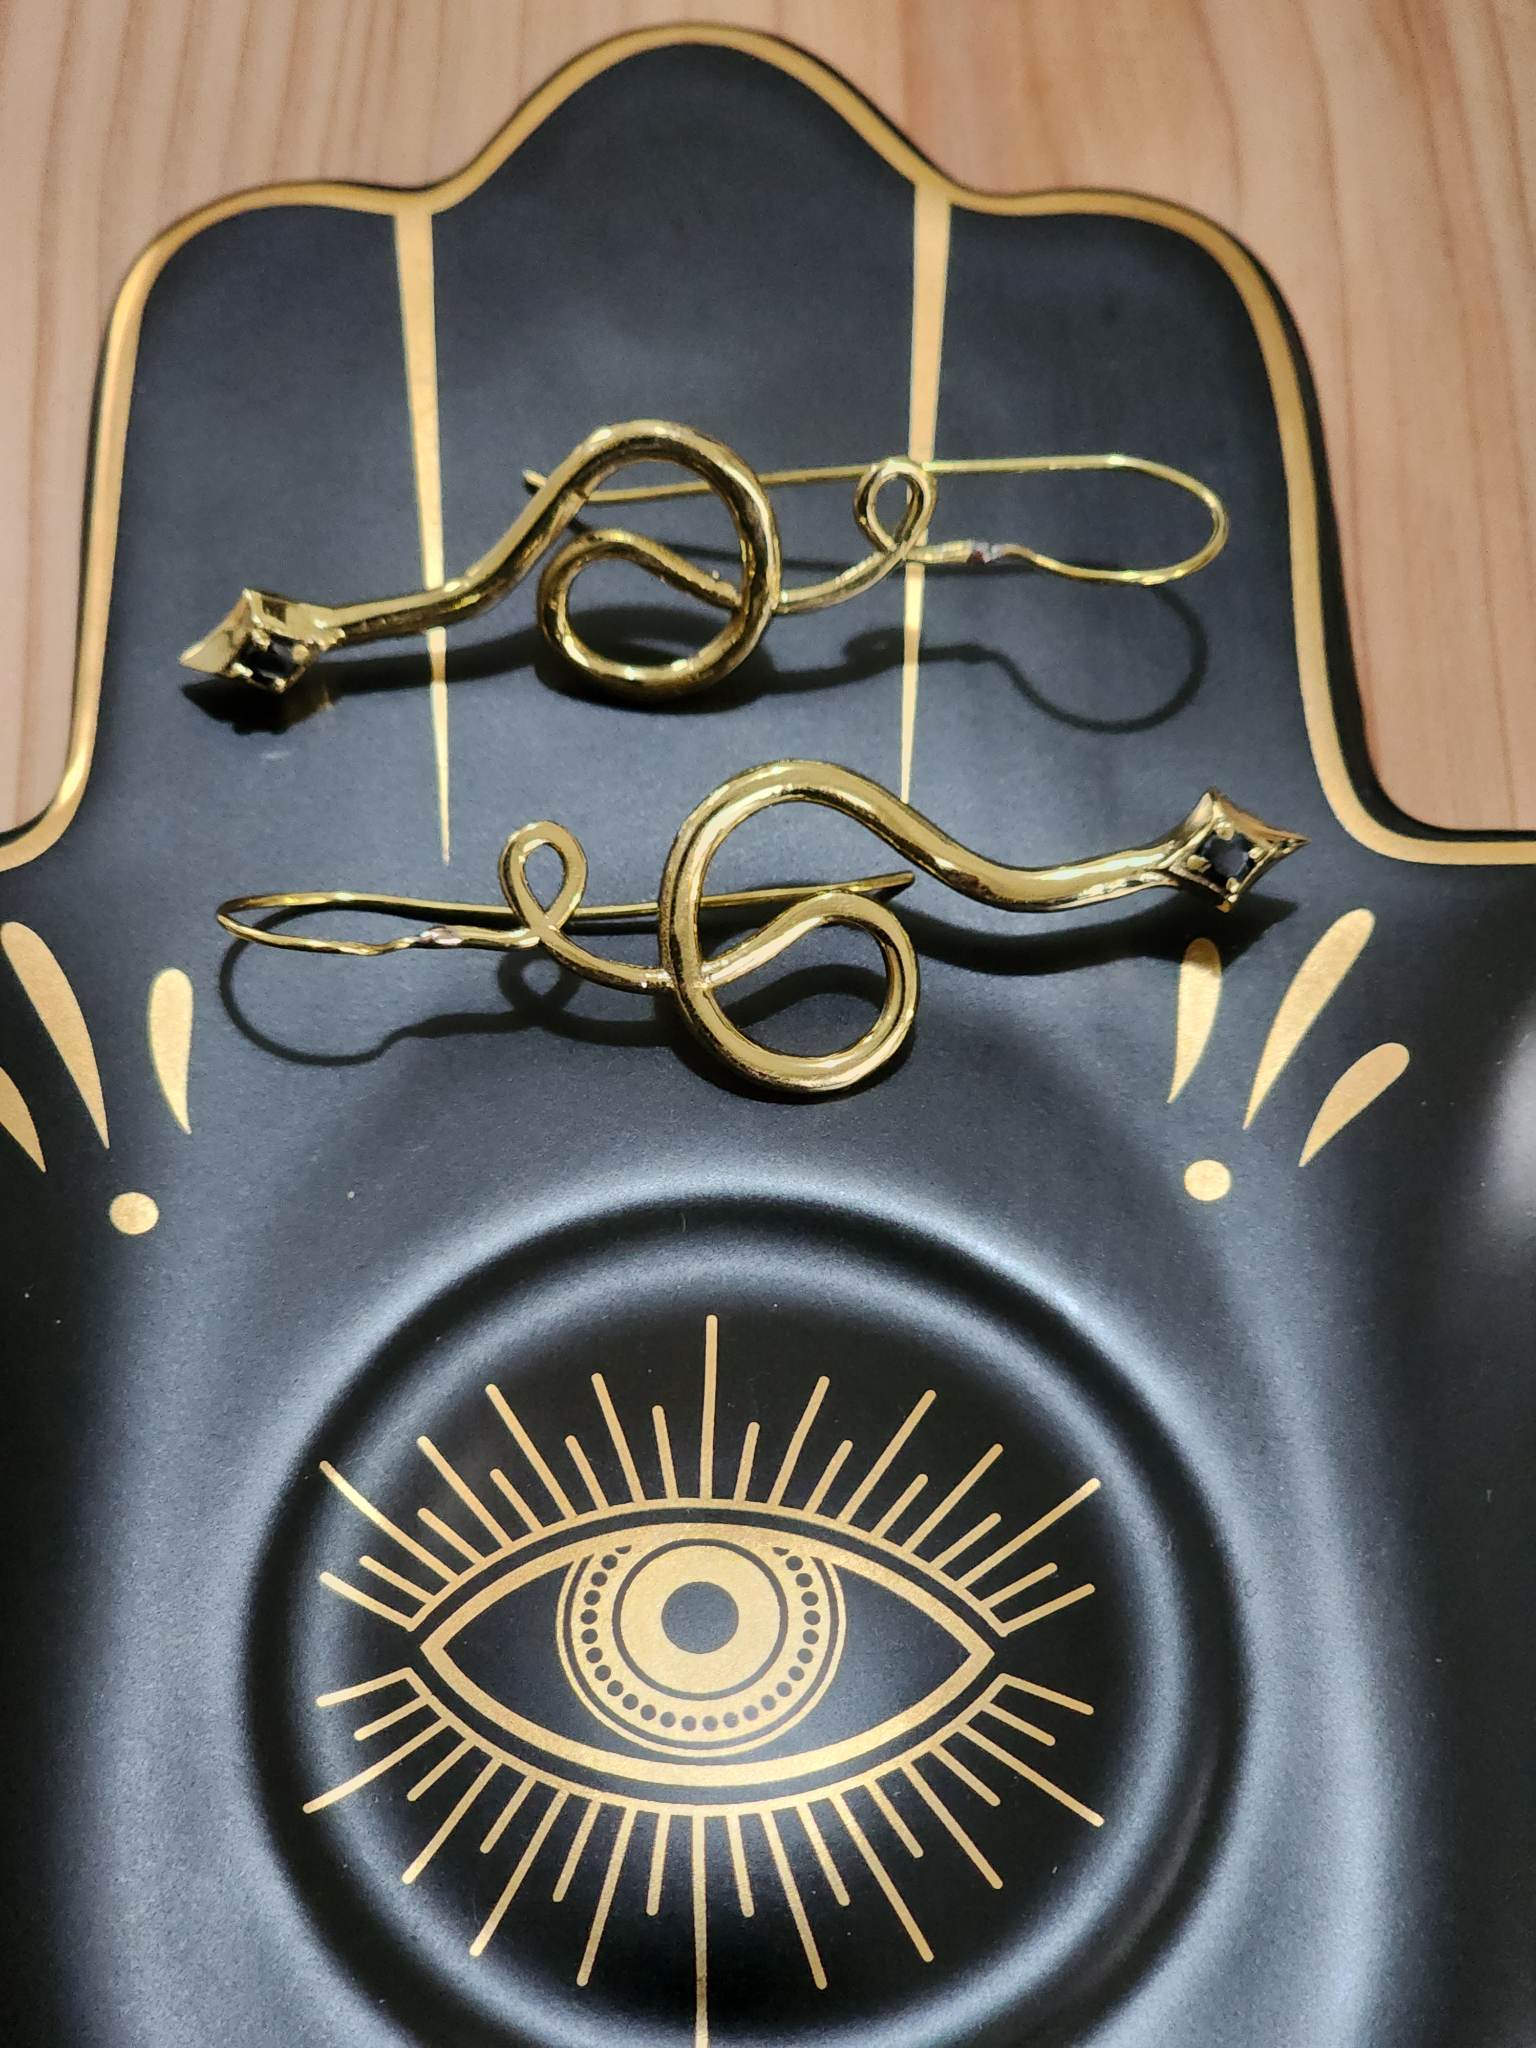 Black Diamond Handmade Snake Wire Earrings